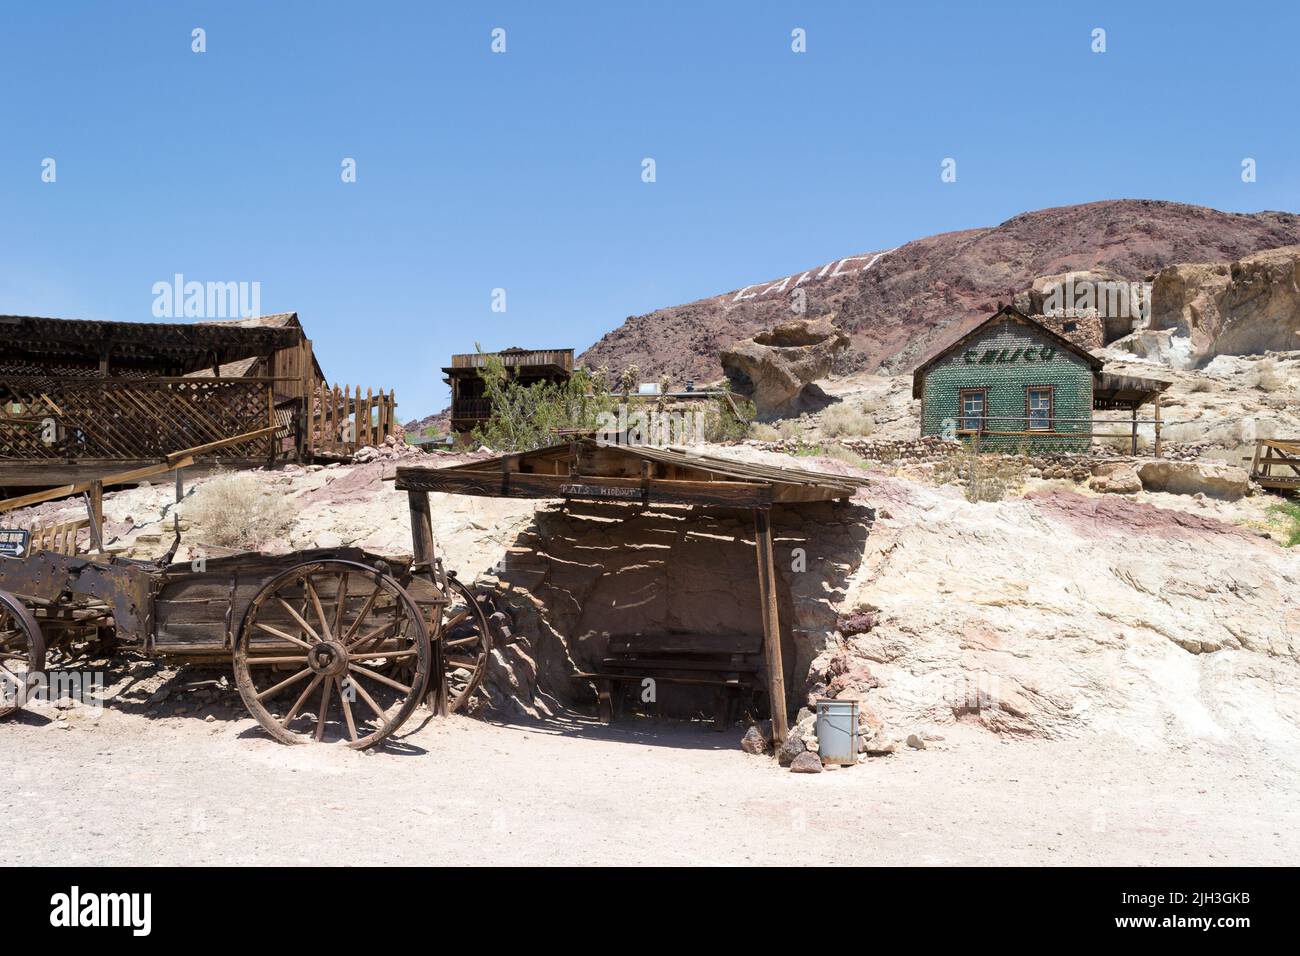 Old horse drawn wagon in Calico. California. Stock Photo